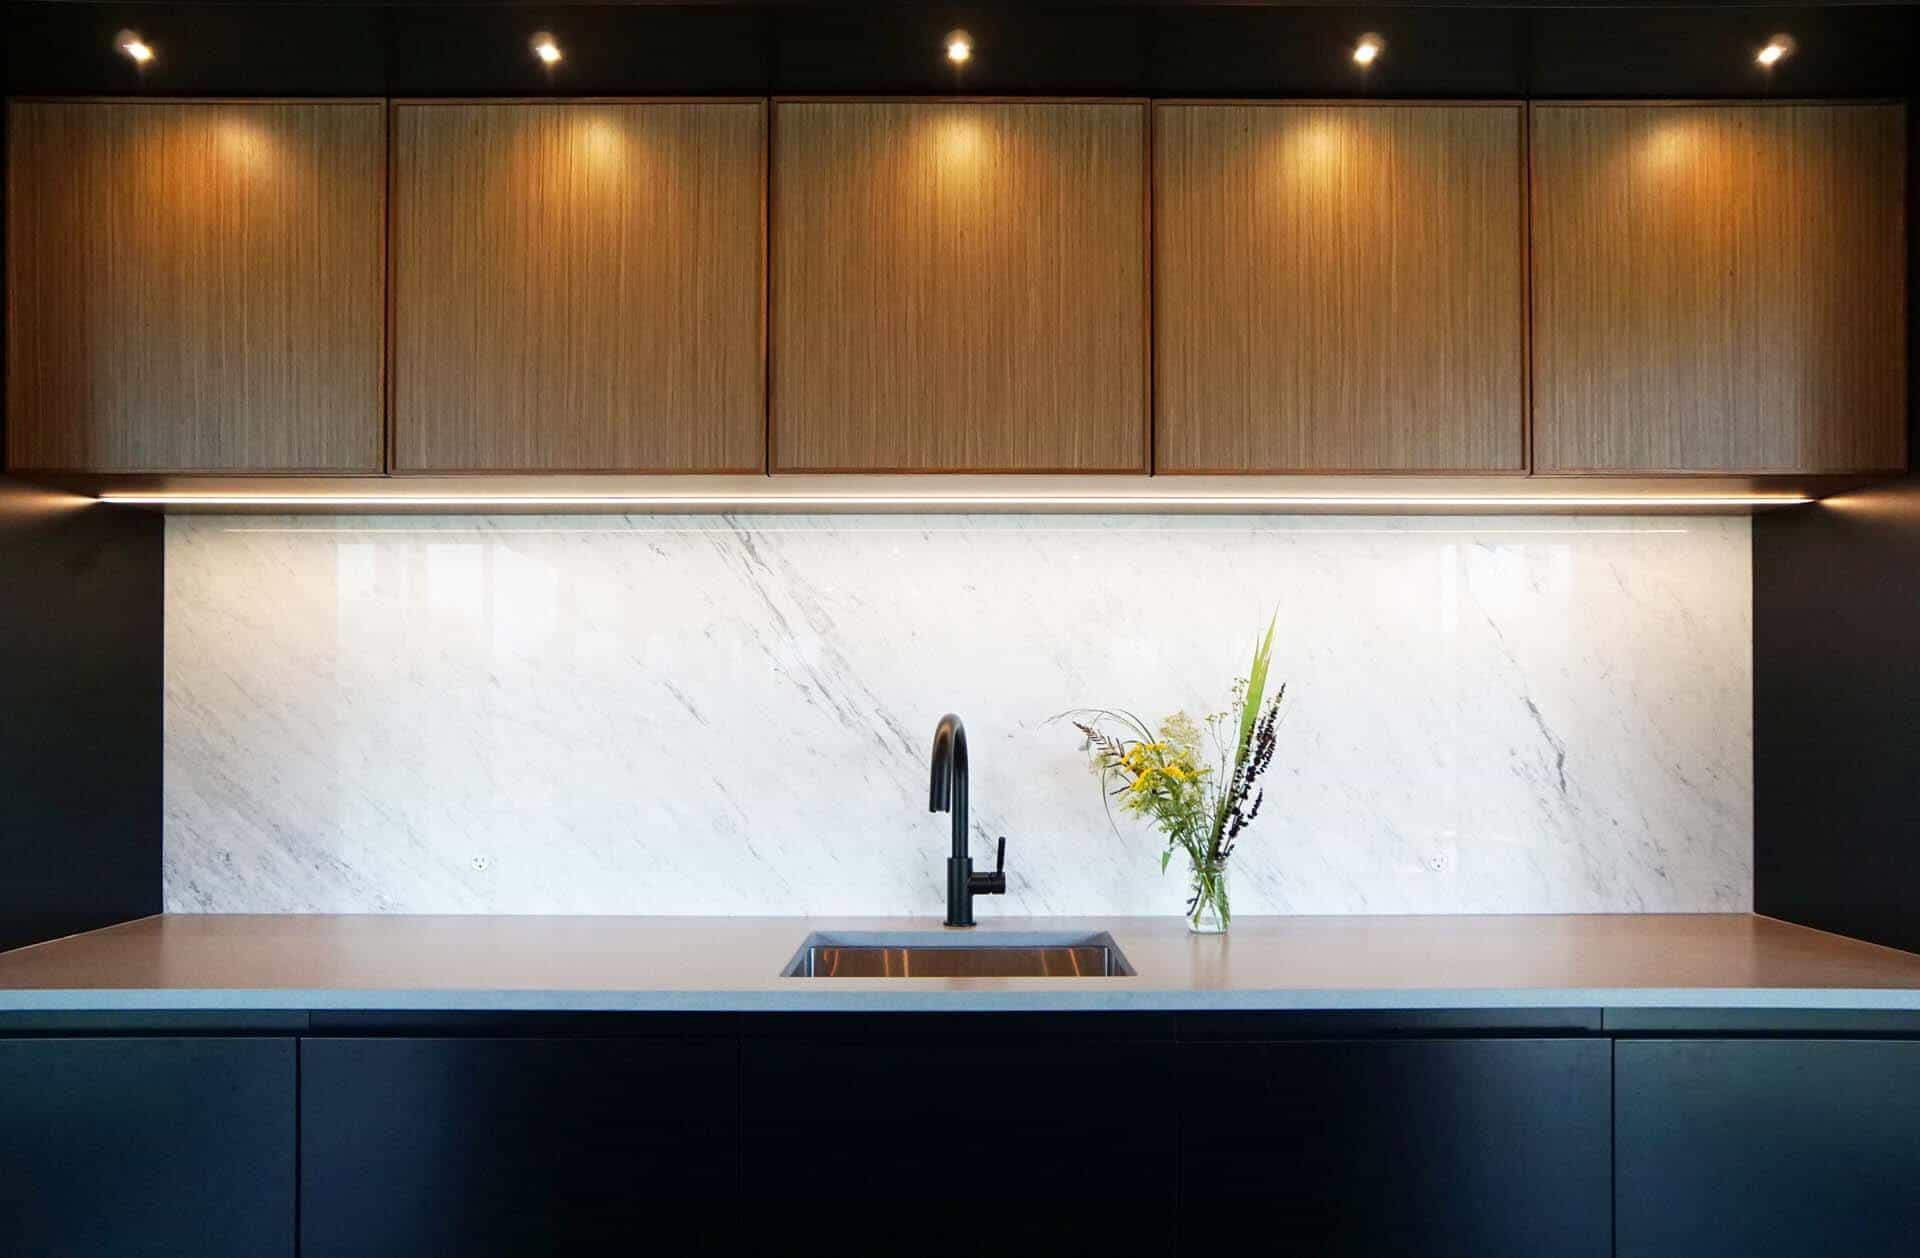 Concrete quartz countertop and Carrera backsplash veining echo the outside landscape of this mid-century modern kitchen.